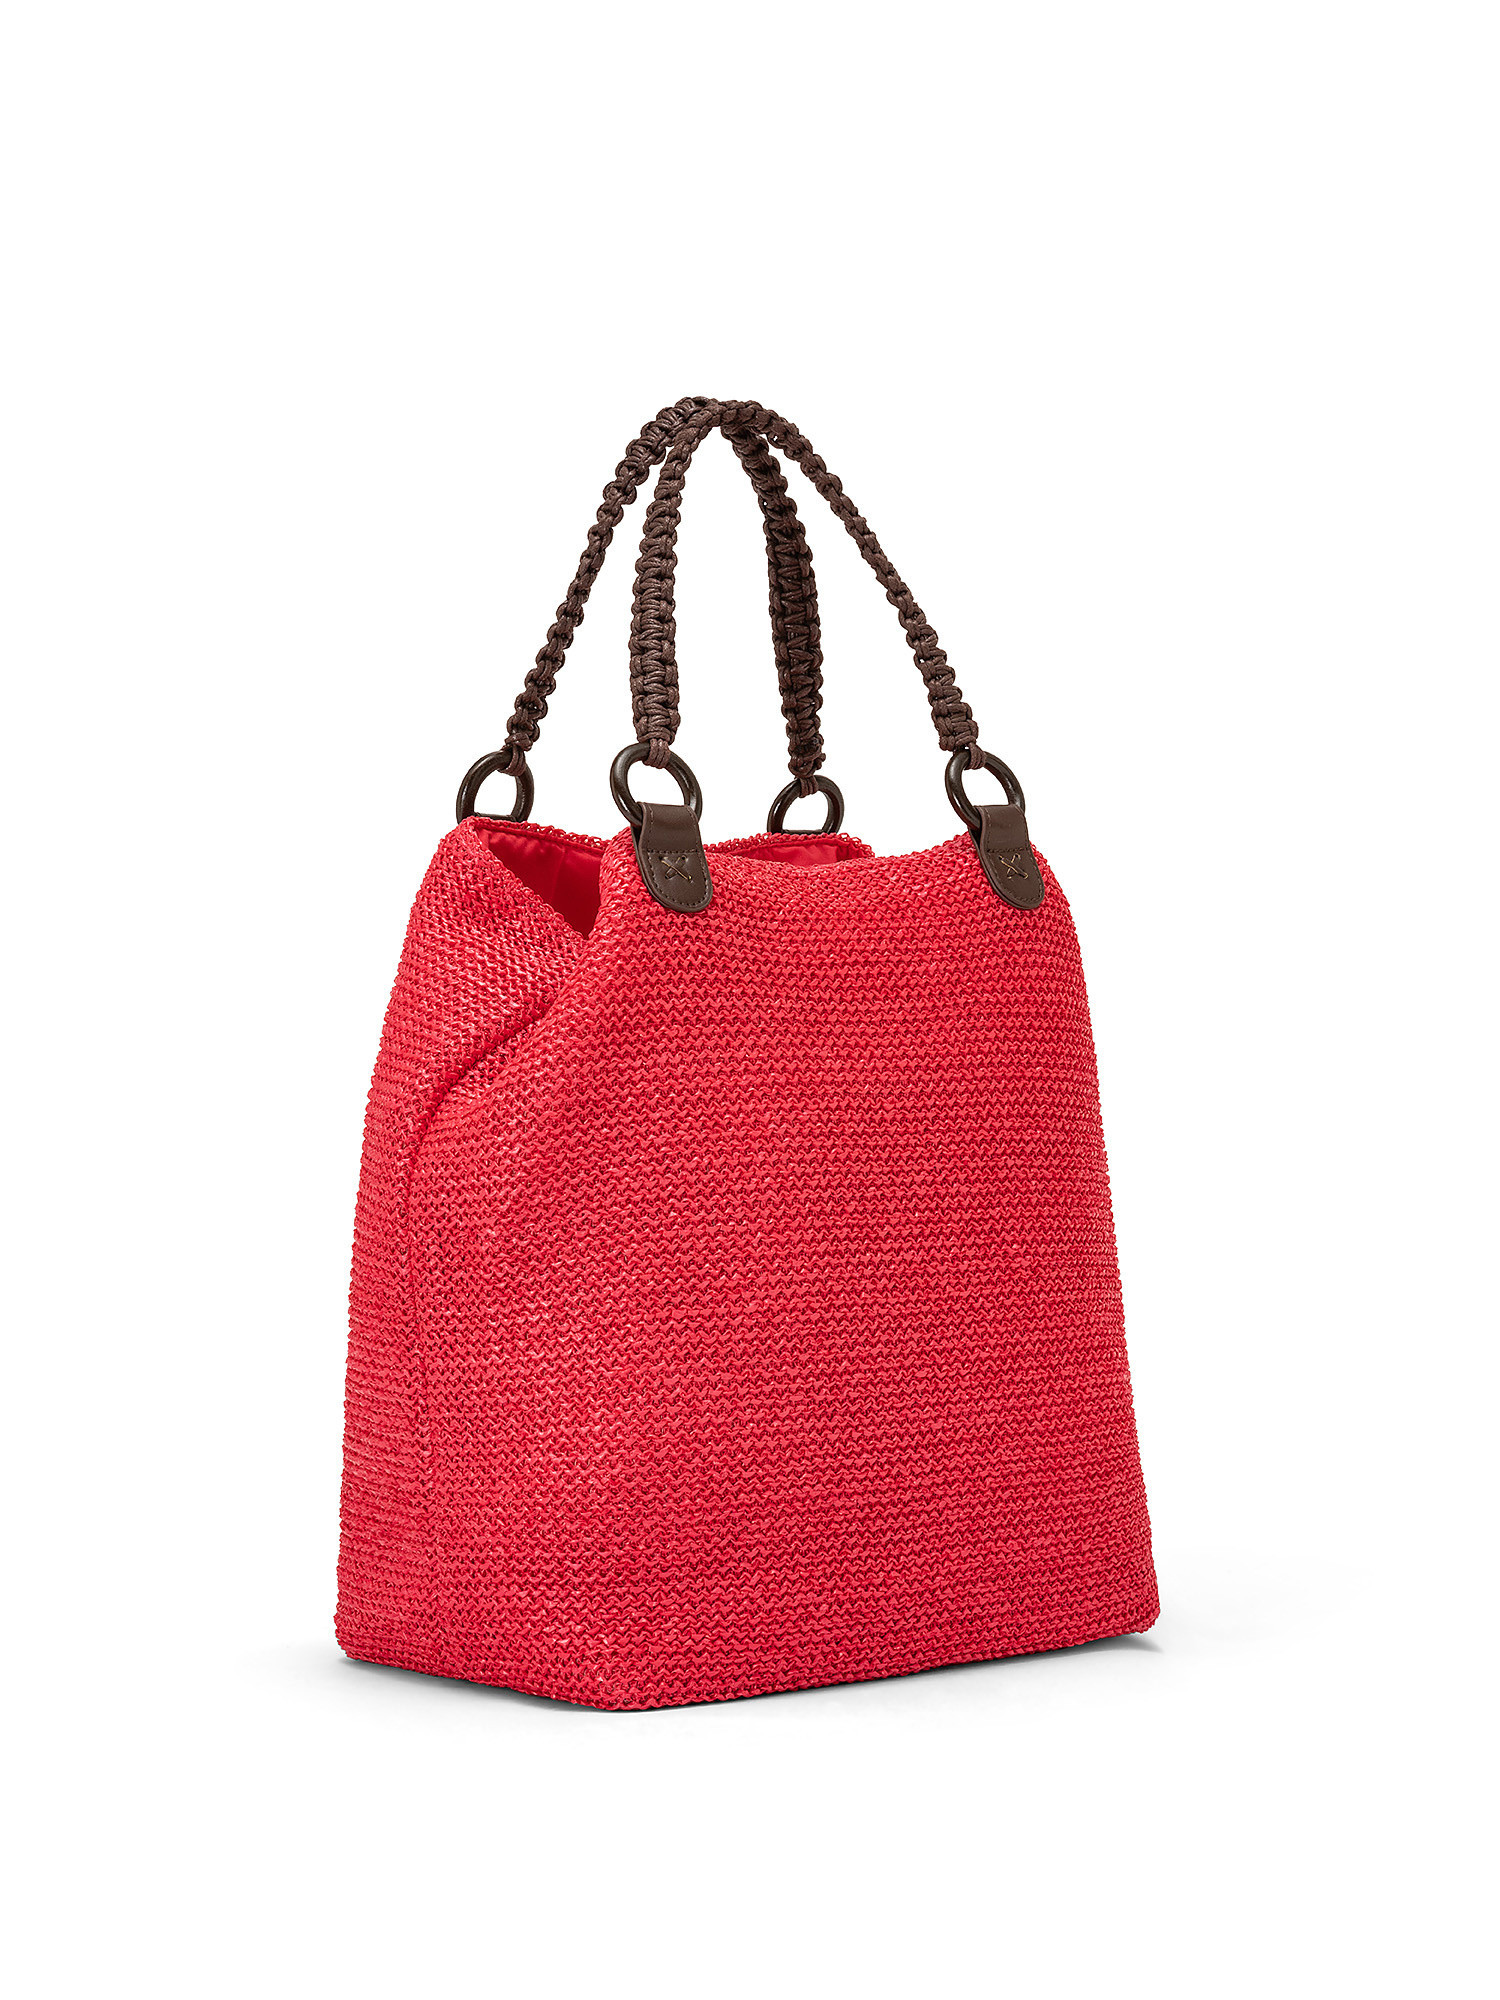 Shopping bag effetto paglia, Rosso, large